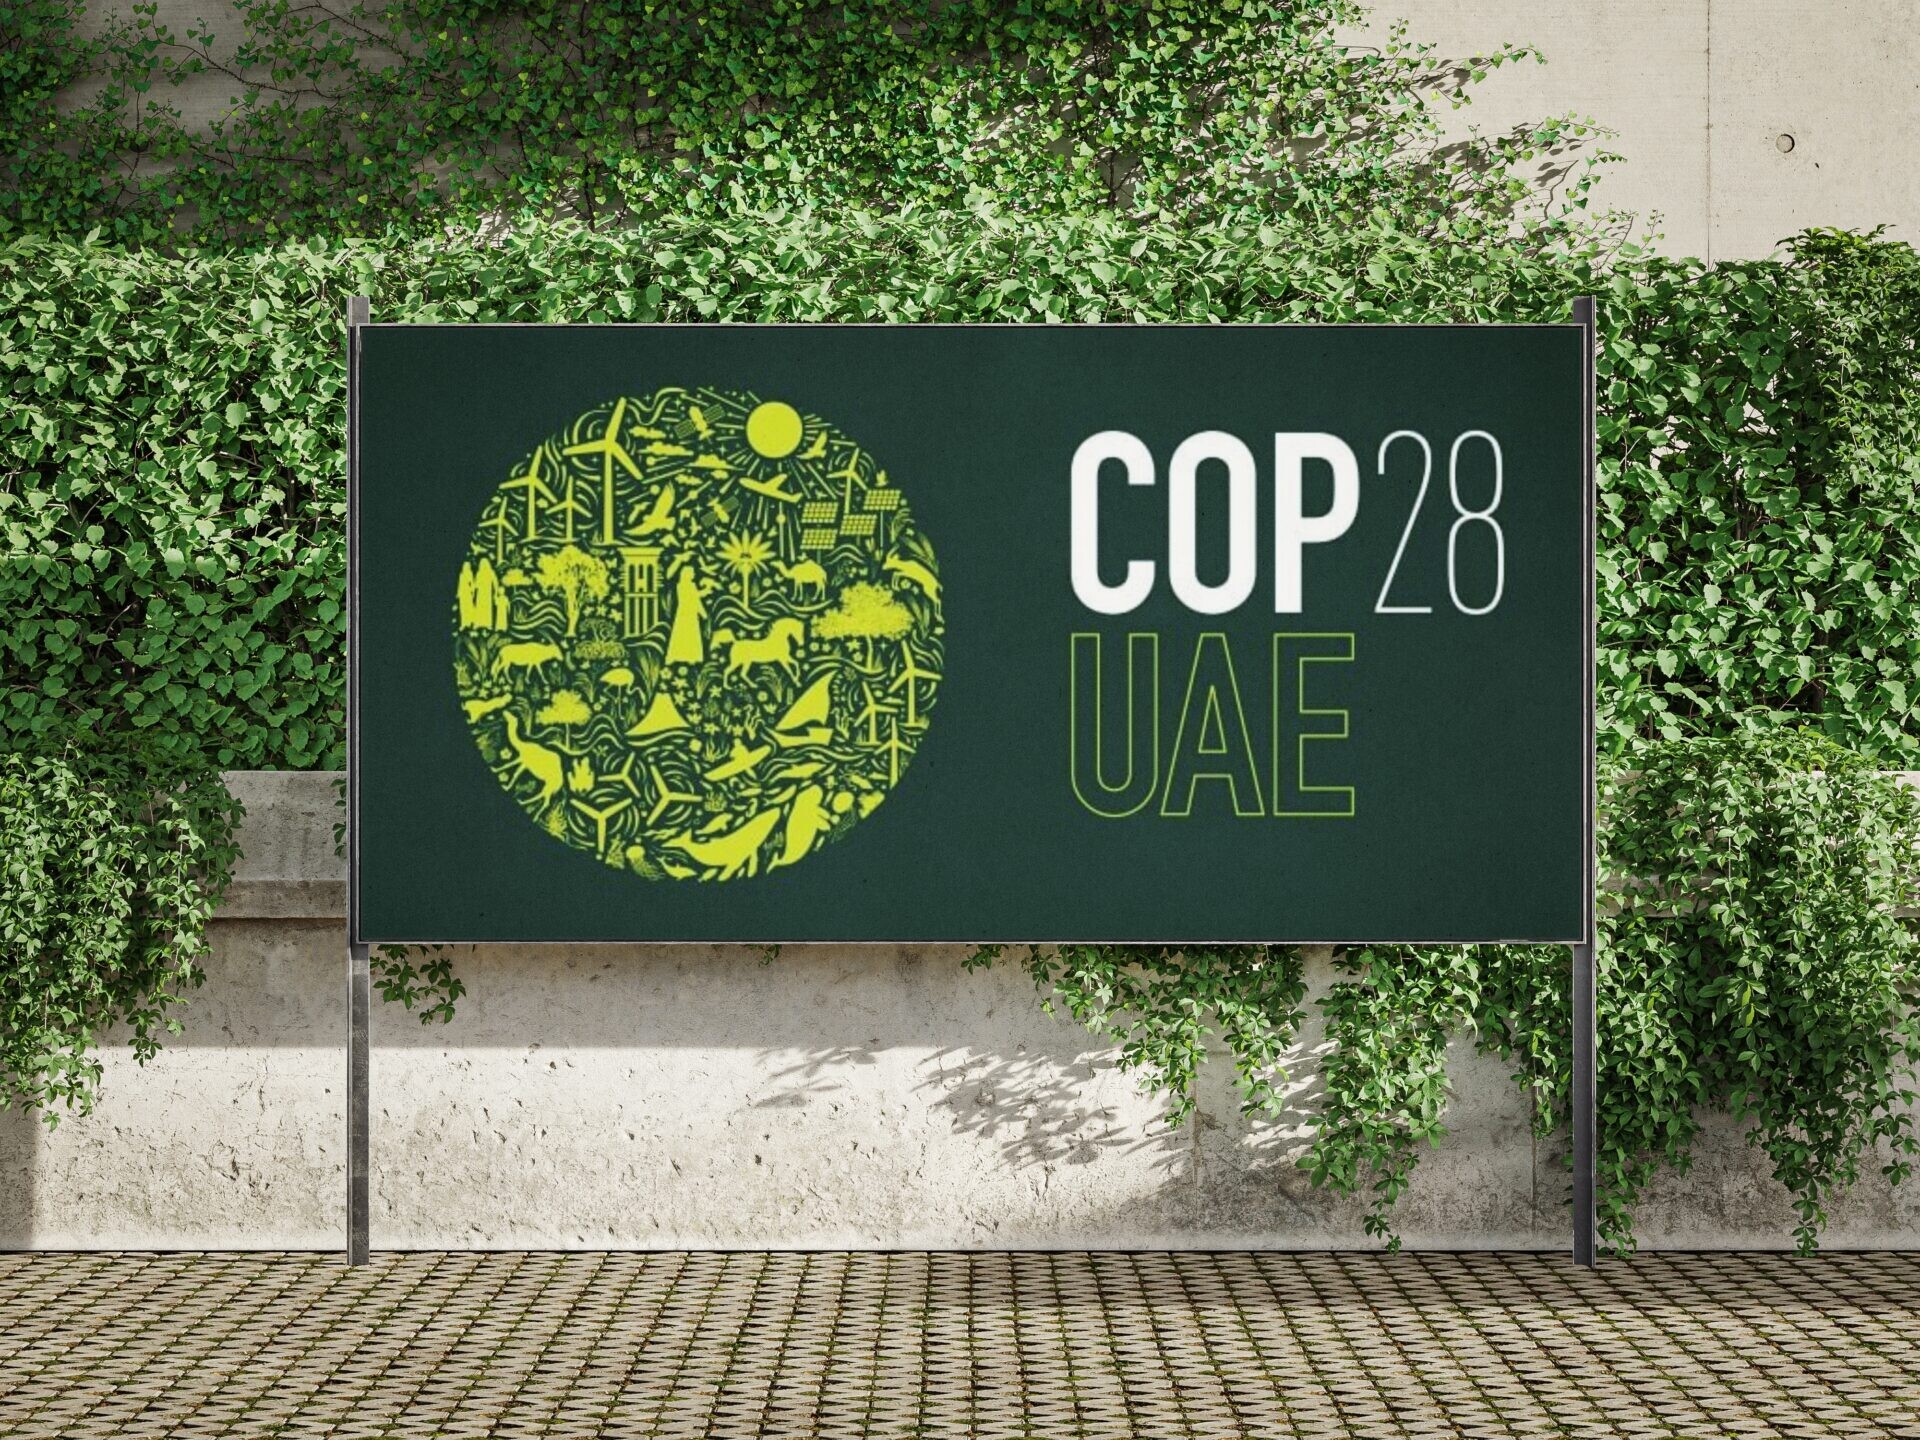 More information about "Σημαντικές αλλαγές για τις πόλεις και τα κτίρια φέρνει η COP28"